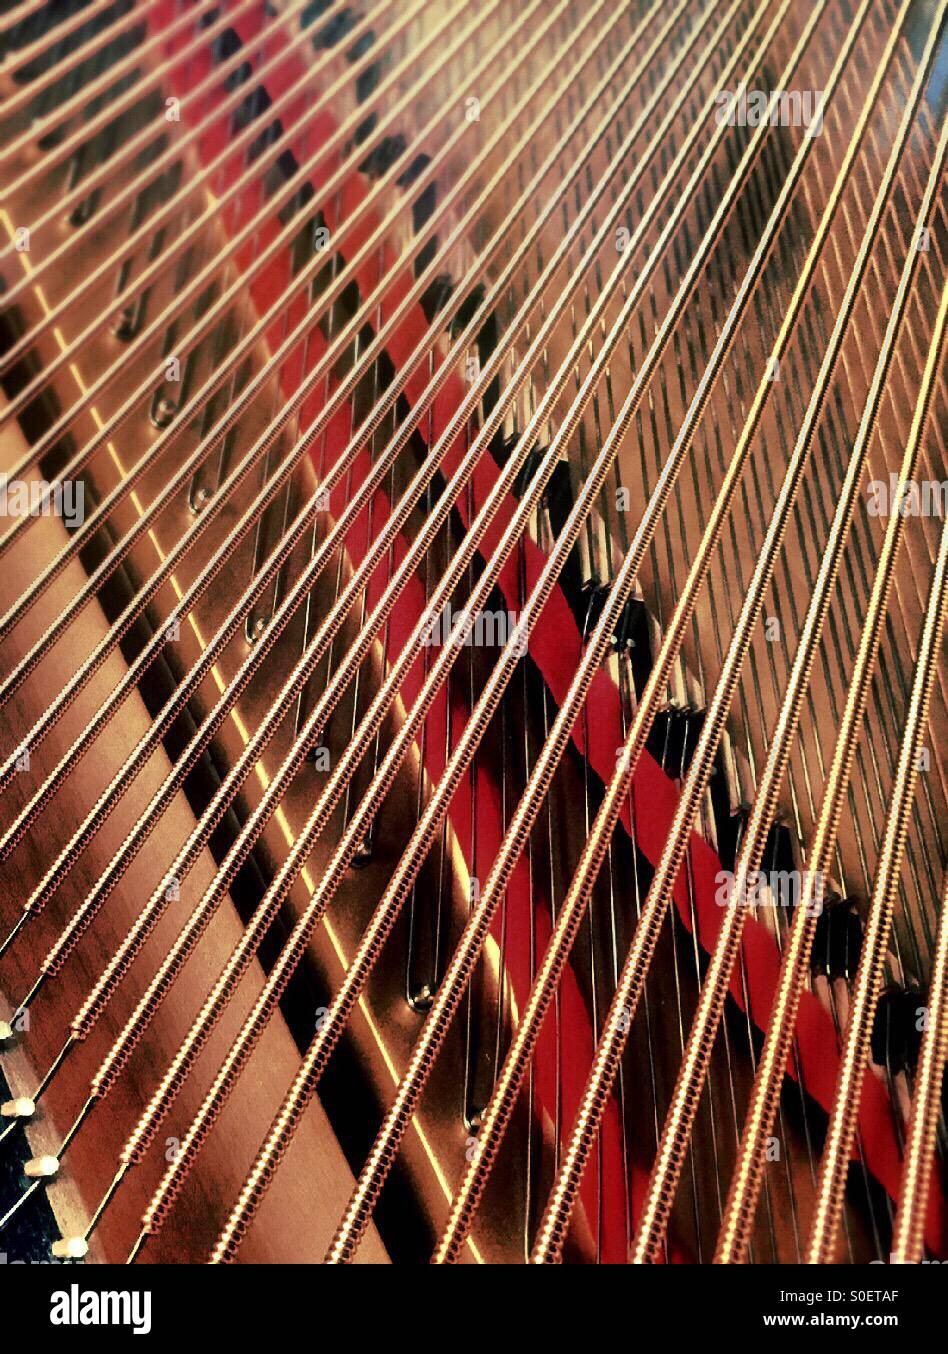 Steinway&Sons grand piano soundboard. NYC Stock Photo